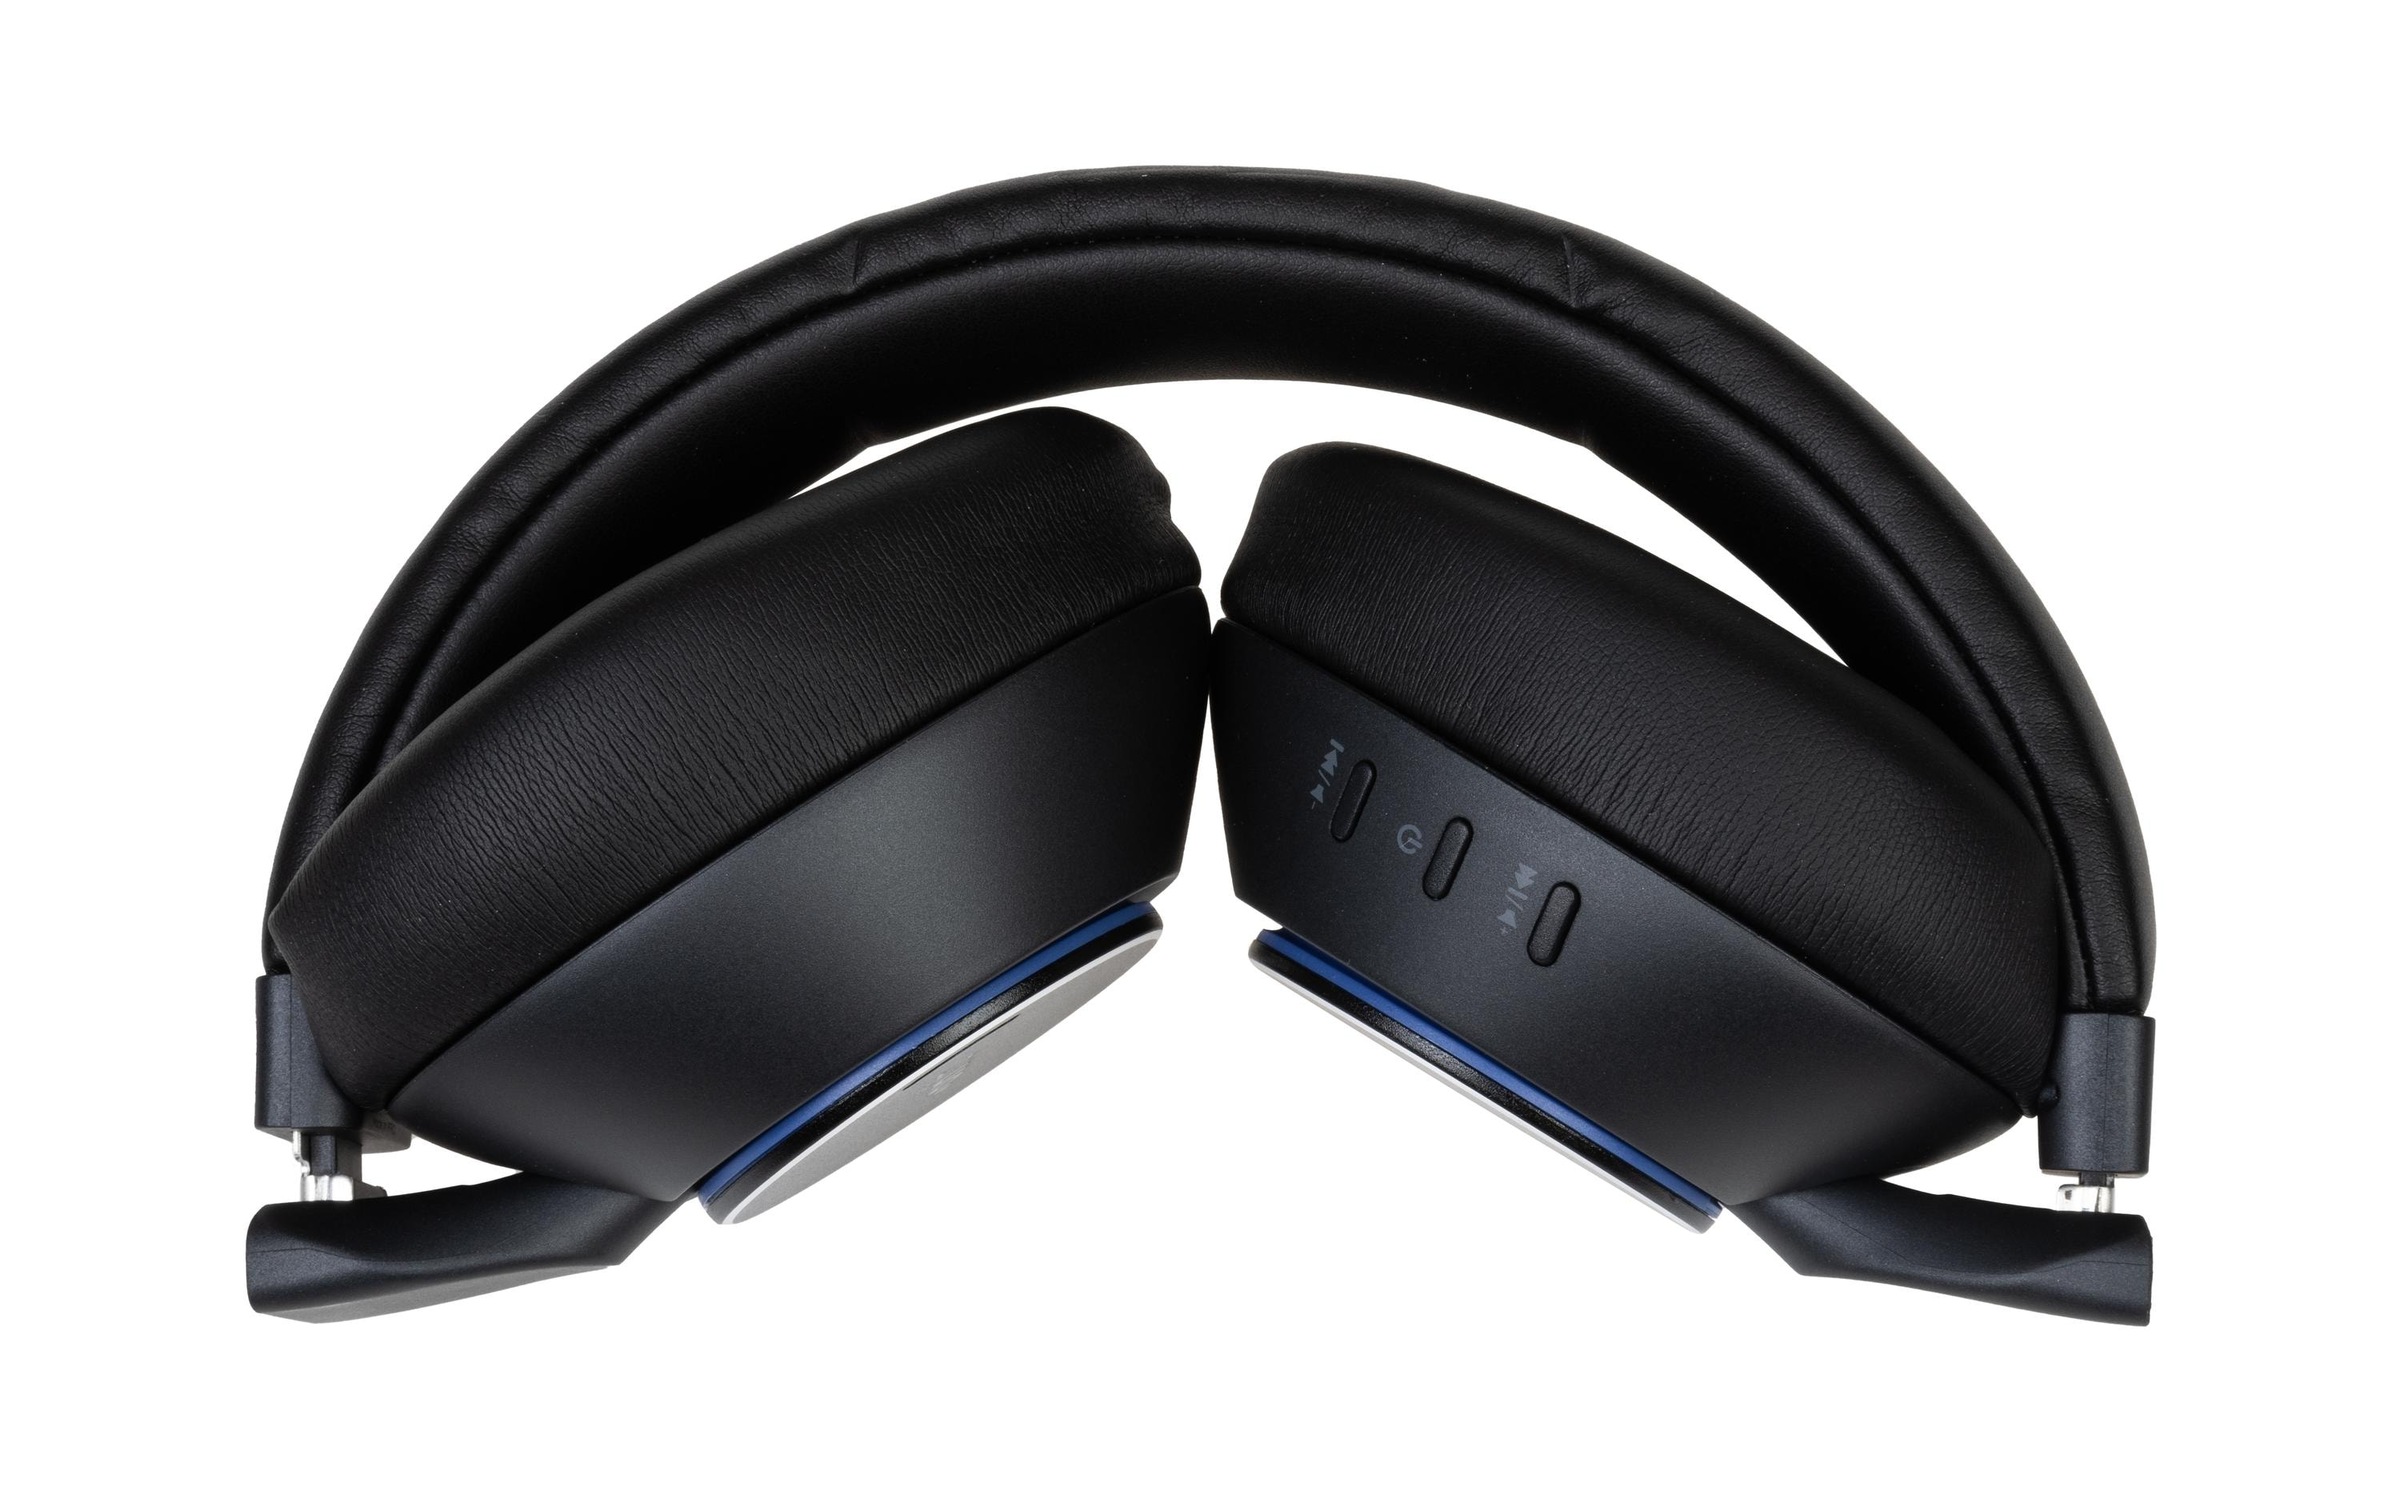 onit Over-Ear-Kopfhörer »Premium Schwarz«, Bluetooth, Adaptive Noise-Cancelling